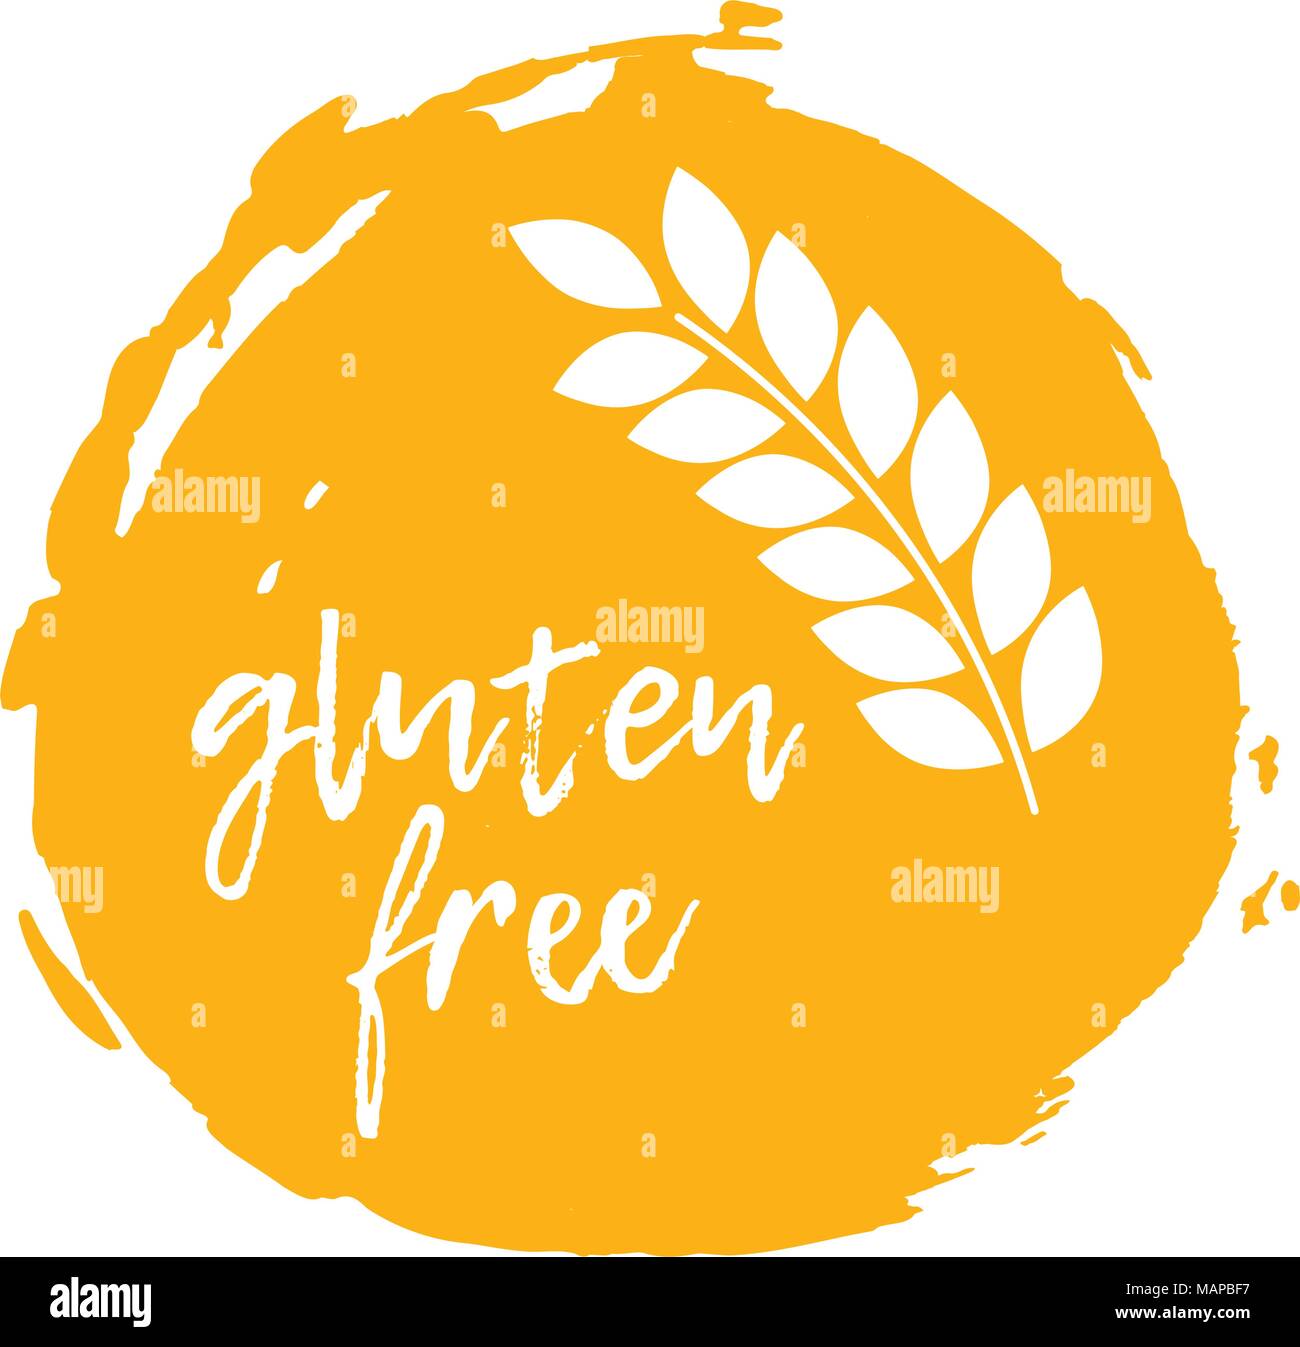 Gluten Free Label. Food intolerance symbols. Vector illustration. Stock Vector